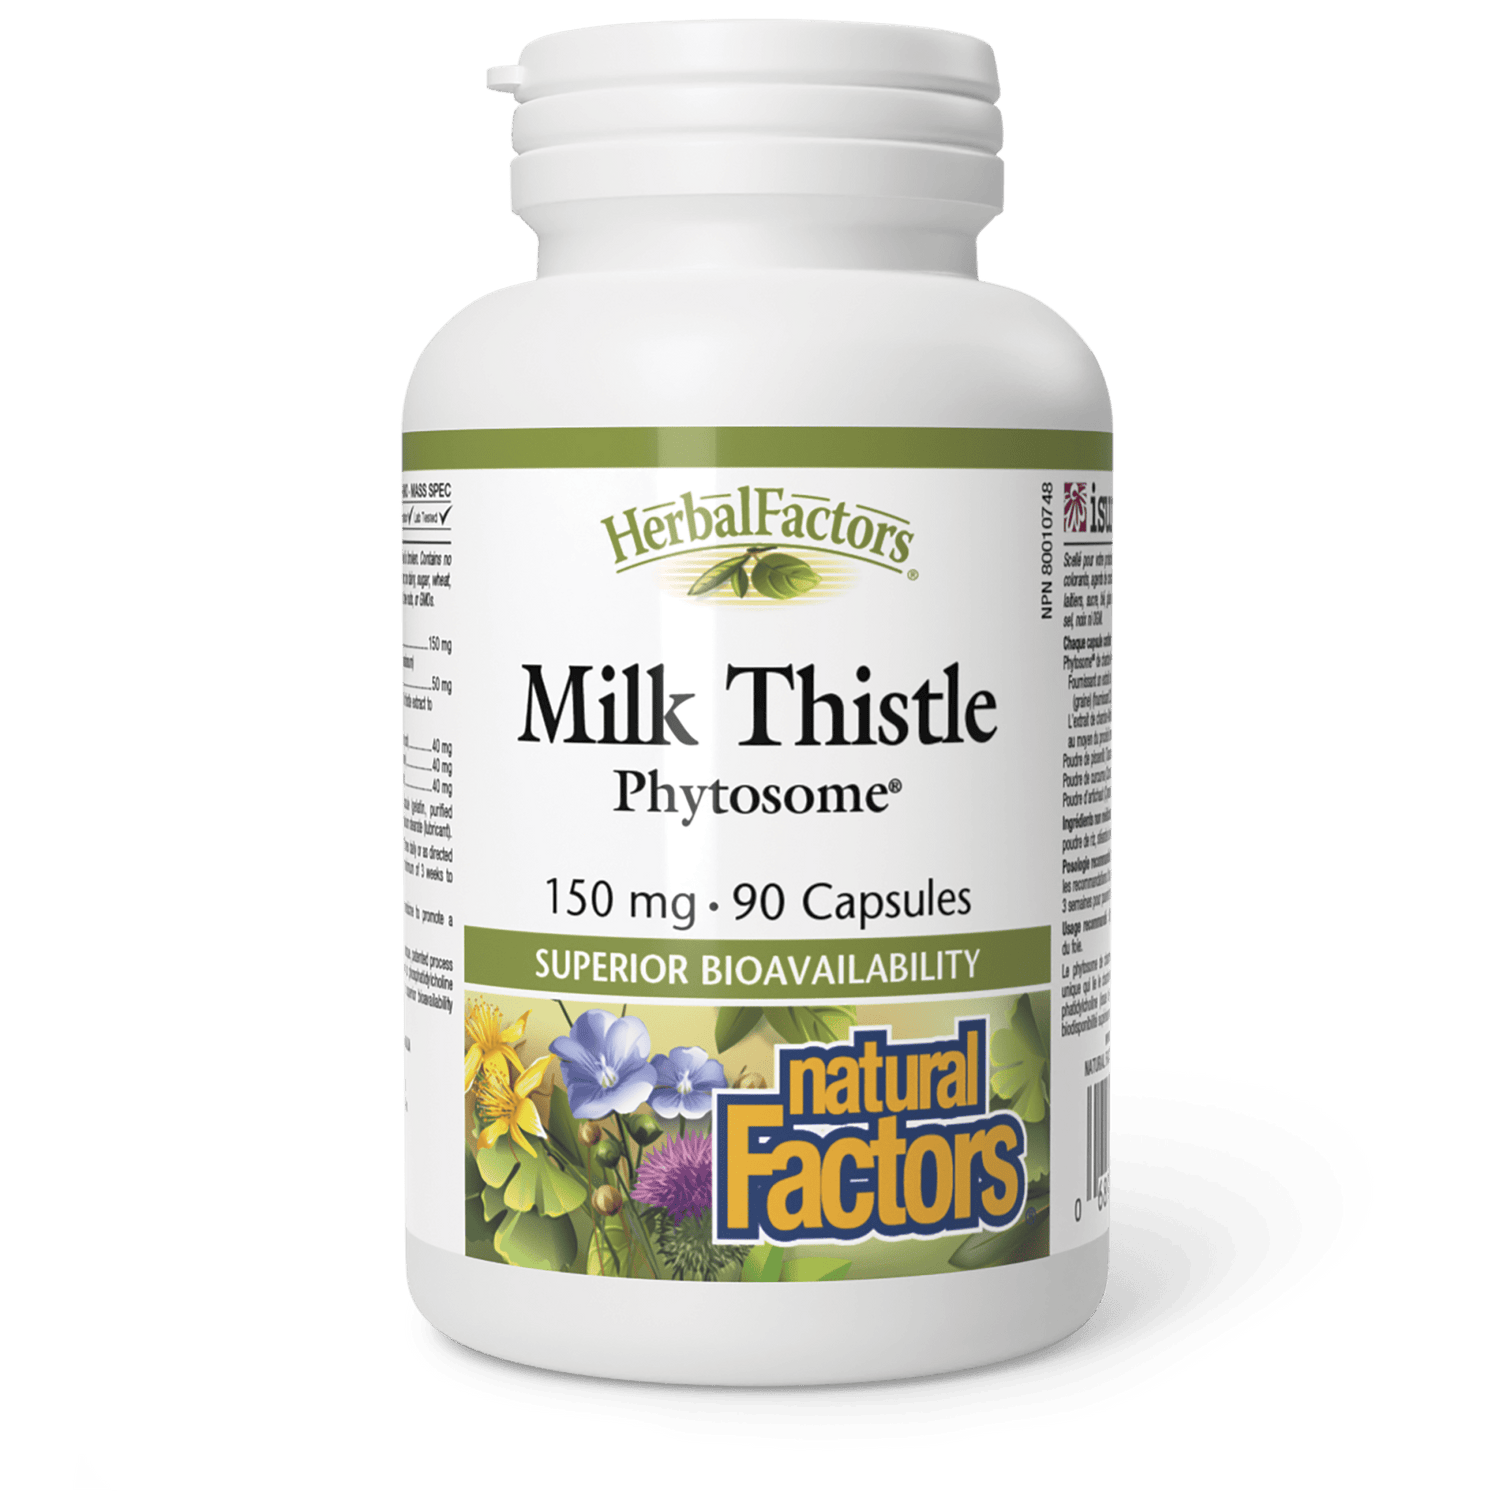 Milk Thistle Phytosome 150 mg, HerbalFactors, Natural Factors|v|image|4800